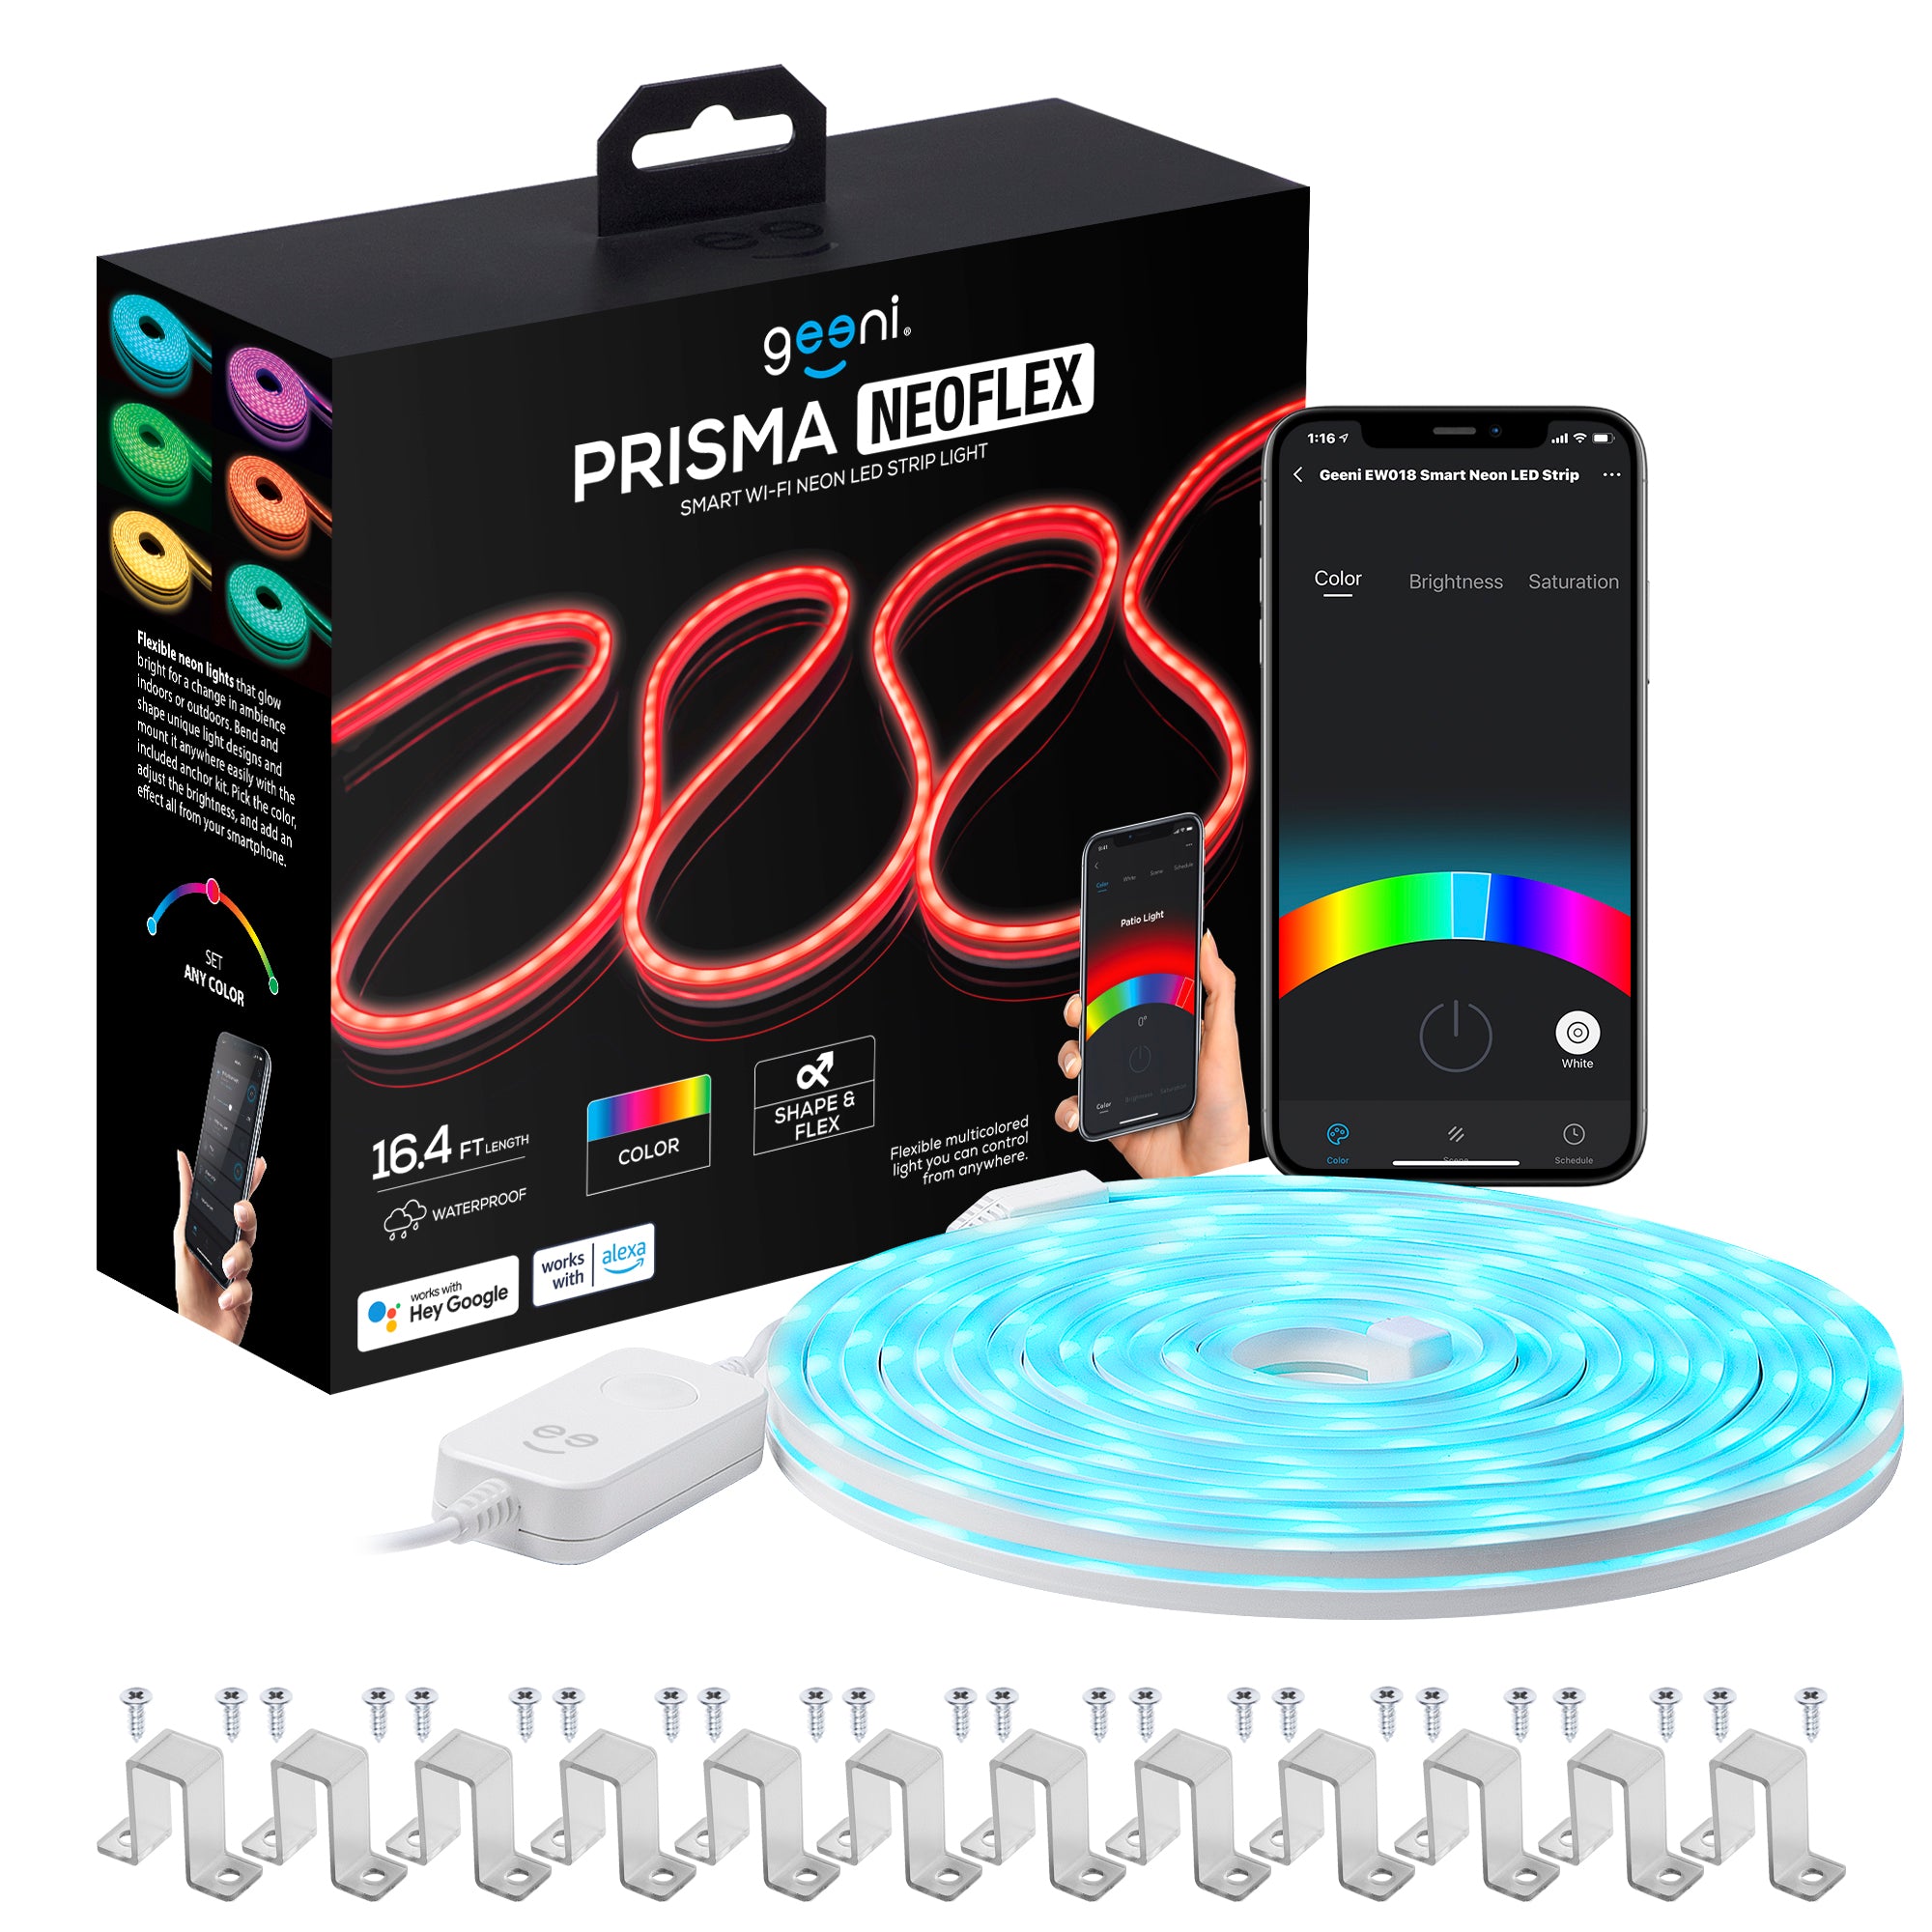 Geeni Prisma Neoflex RGB Strip Light with Music Sync (16.4 ft.)